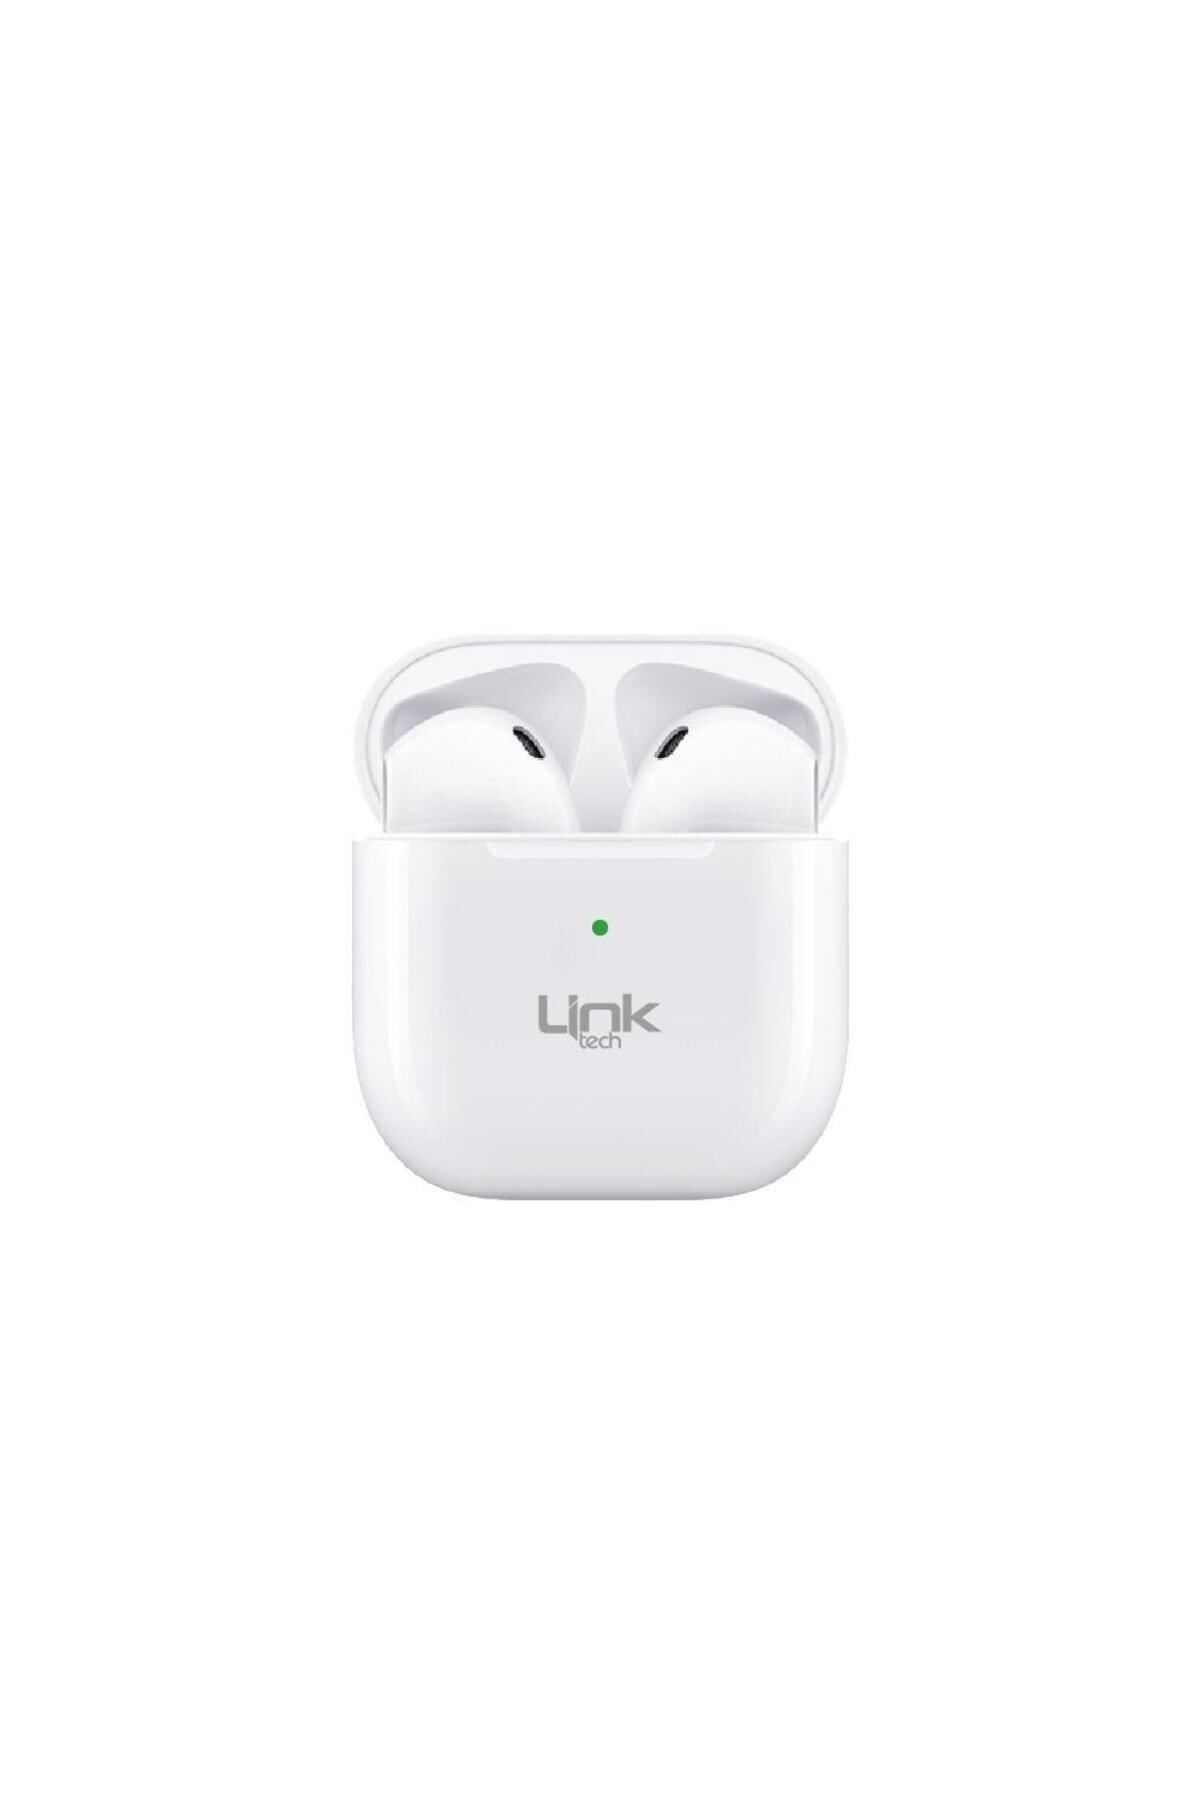 Linktech Ap01 Eco Friendly Uyumlu Bluetooth Kulaklık Gri Renk Kılıf Hediyeli